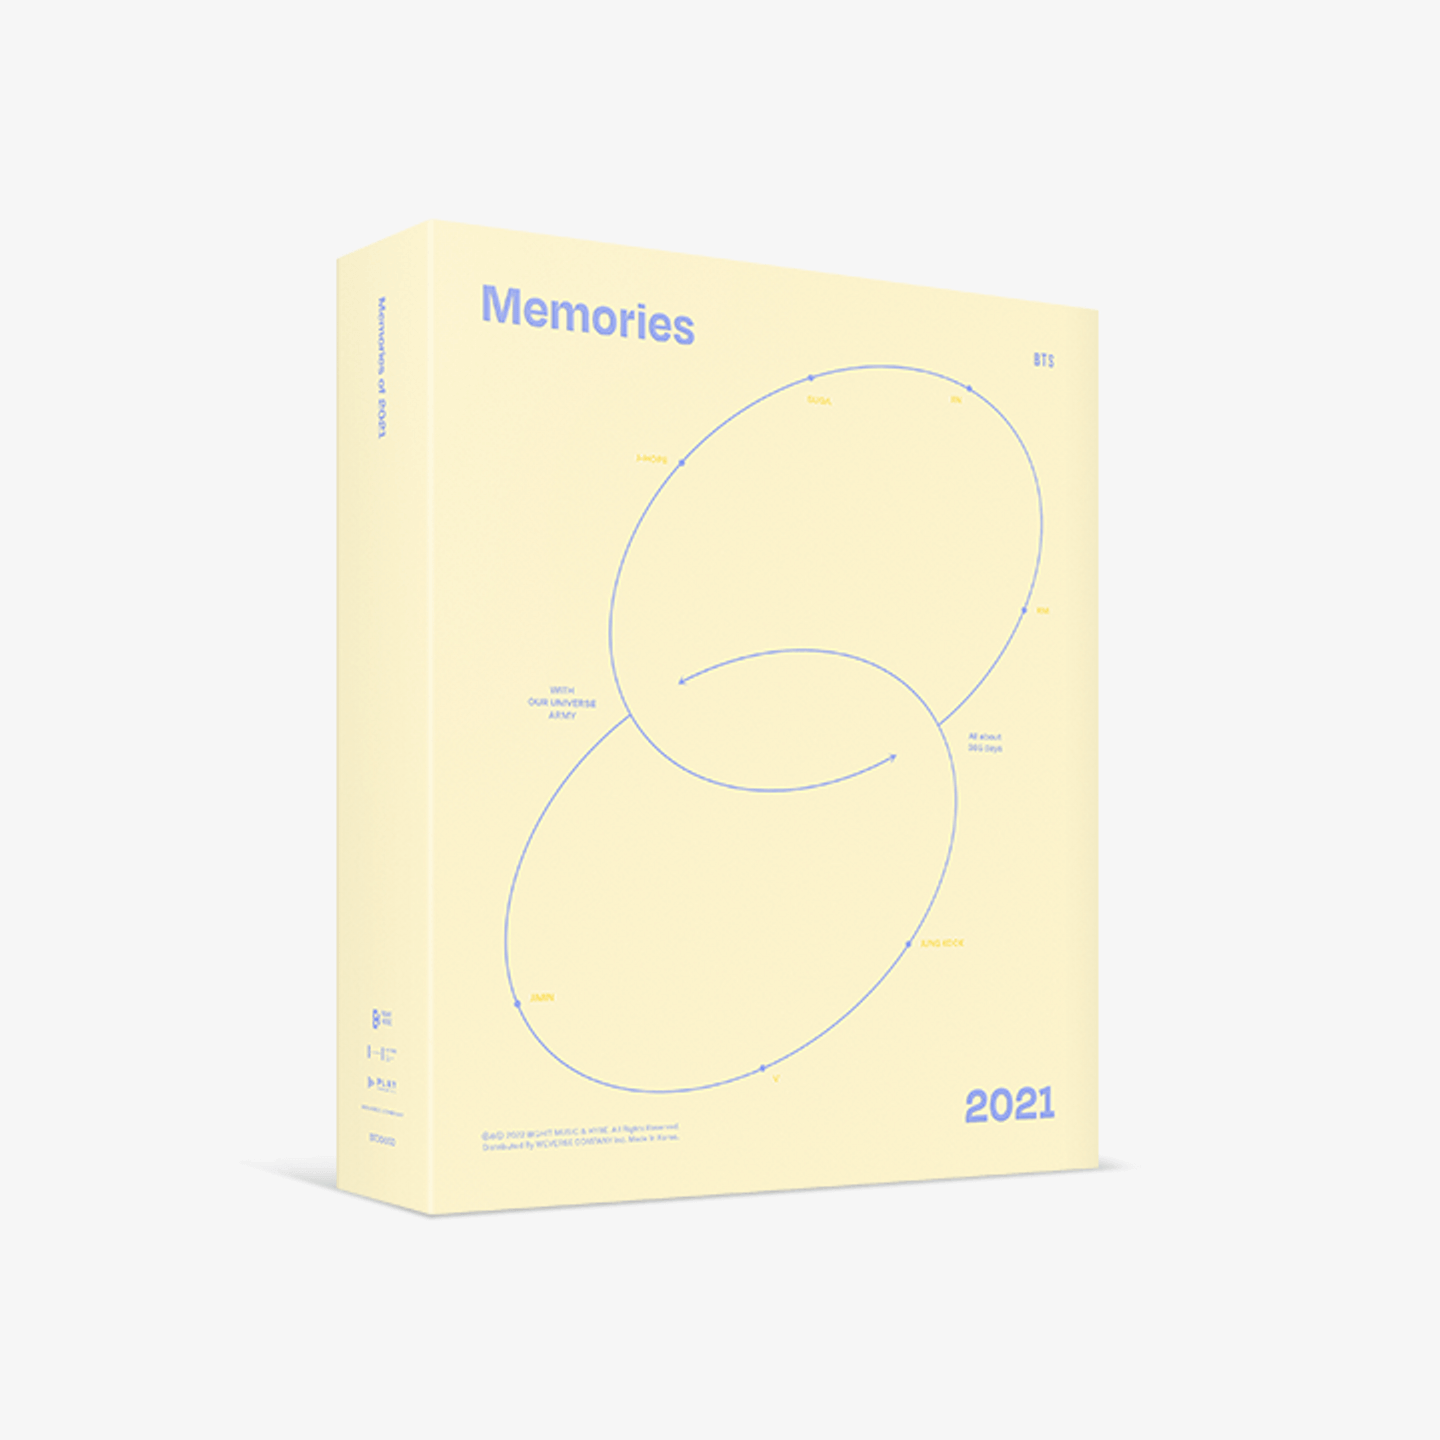 BTS - Memories of 2021 Digital Code